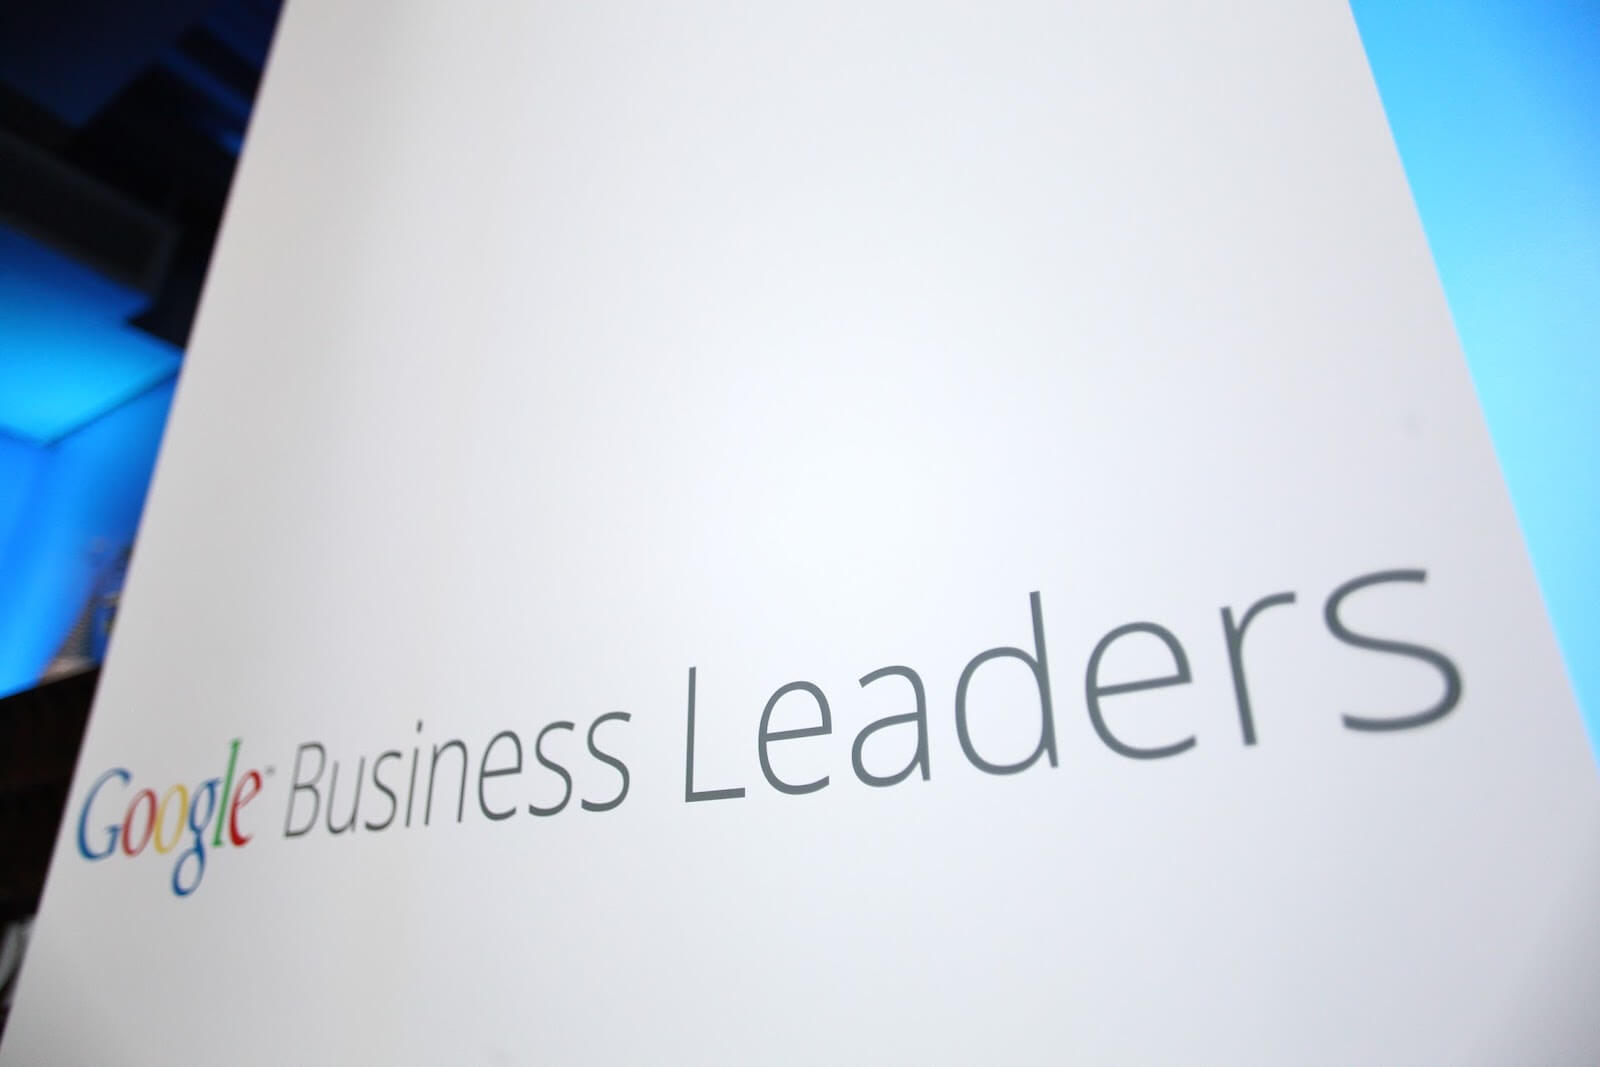 Google Business Leaders logo